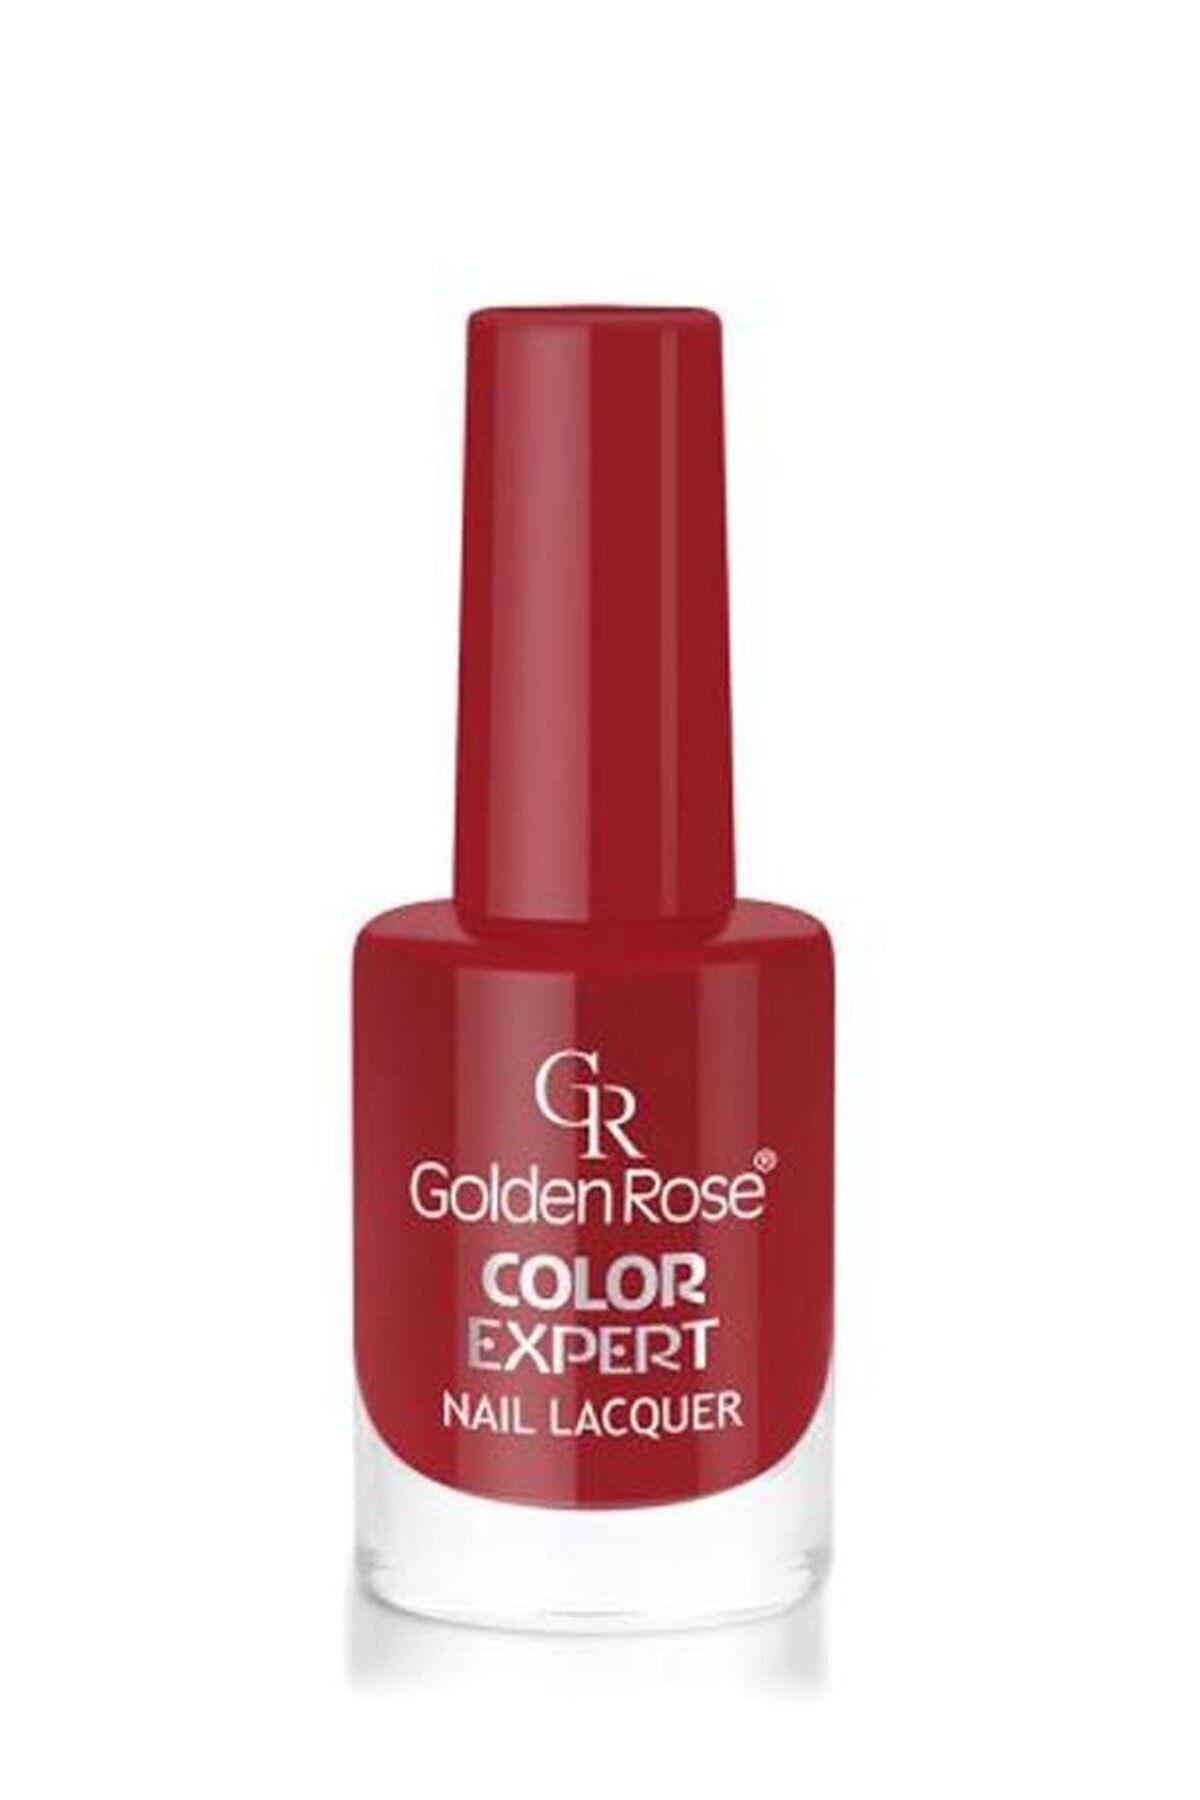 Golden Rose Oje - Color Expert Nail Lacquer No: 77 8691190703776